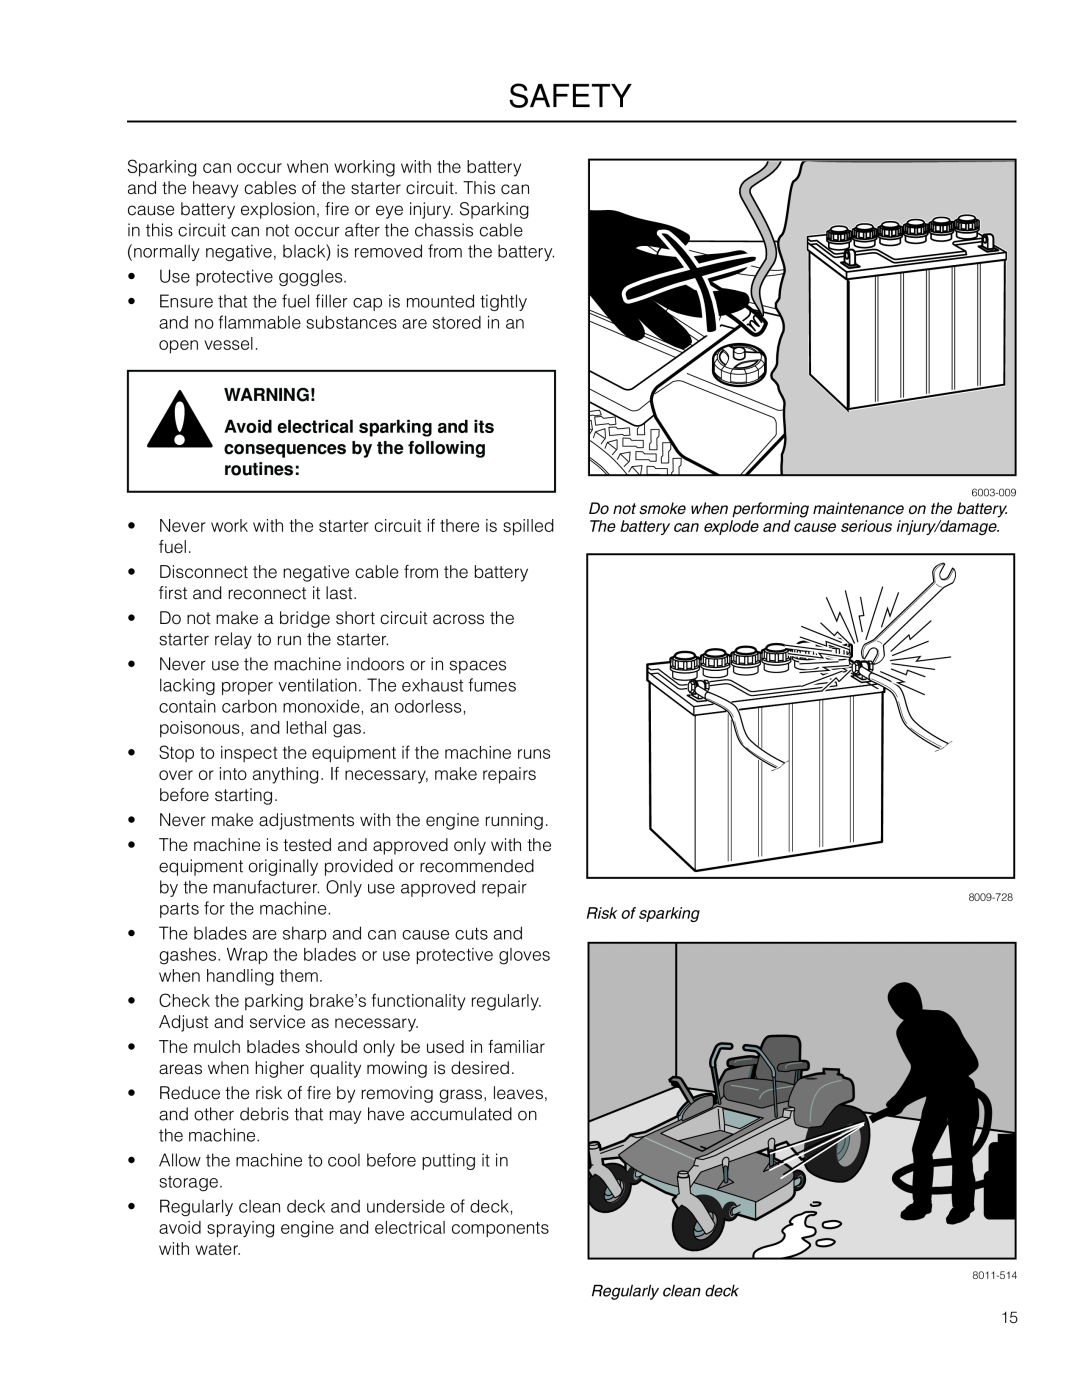 Dixon SZ4216 CA, 966505101, 115 338927R1 manual Safety, Use protective goggles 